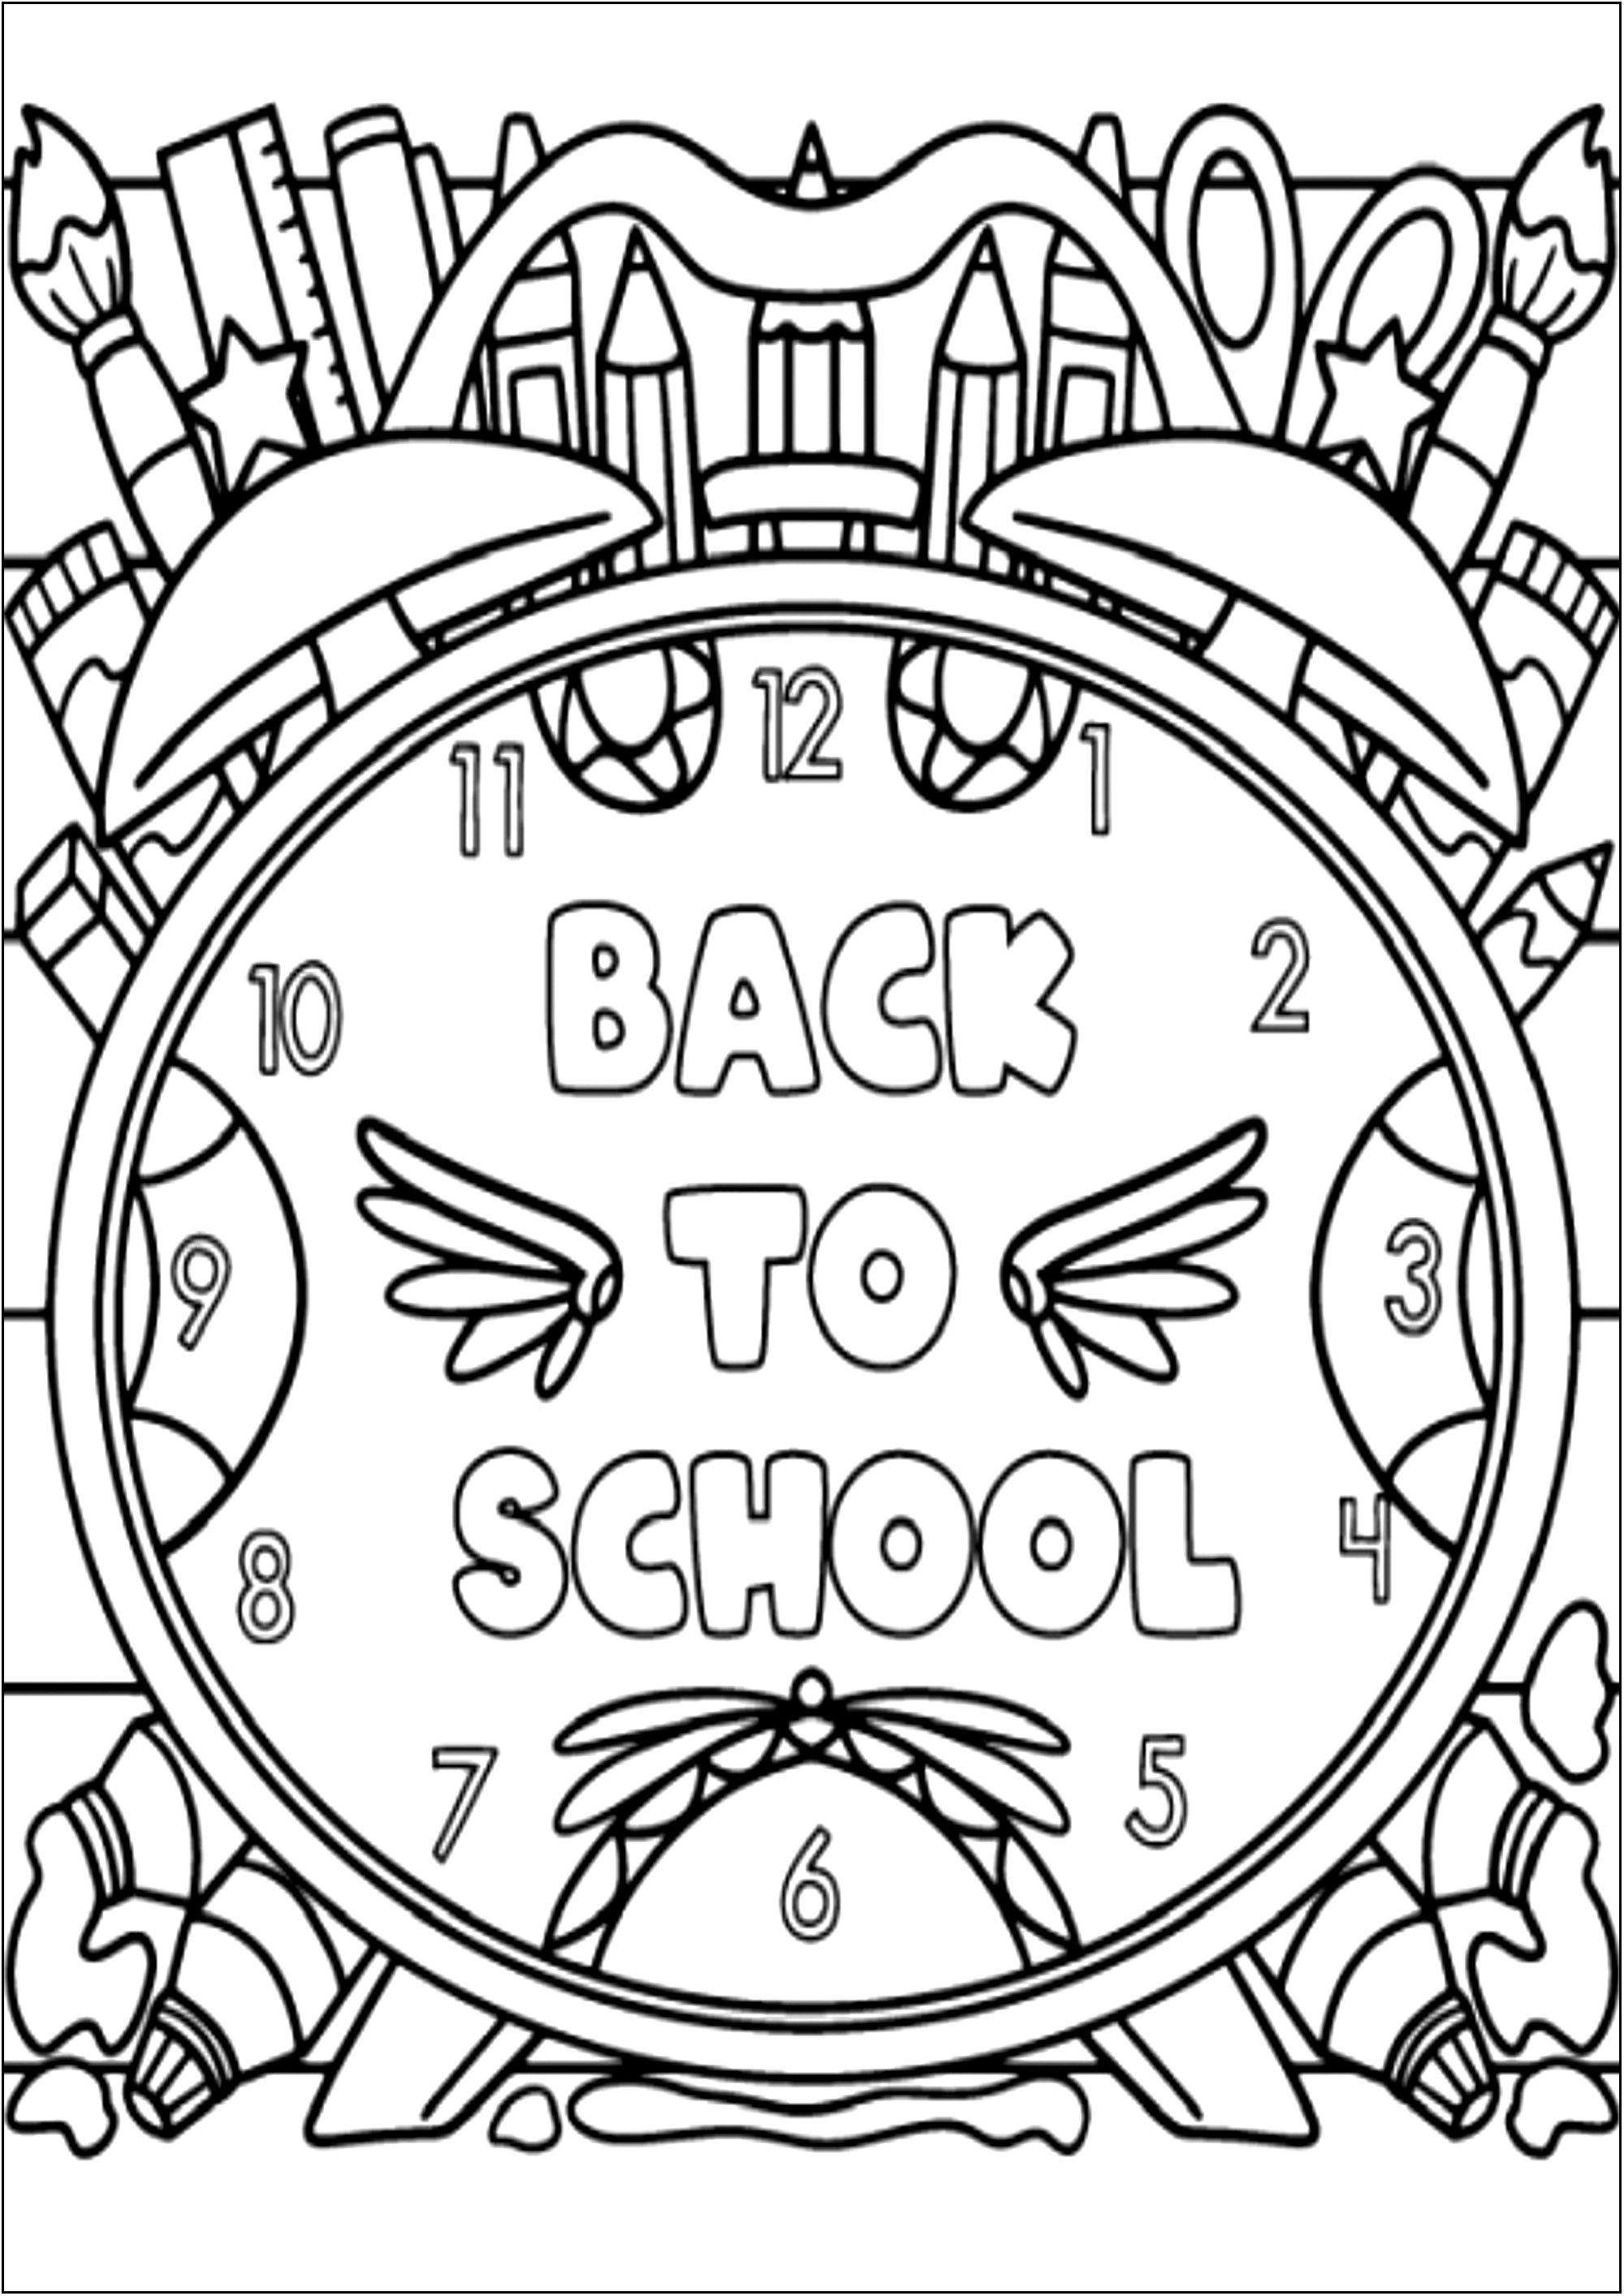 'Back to school' clock